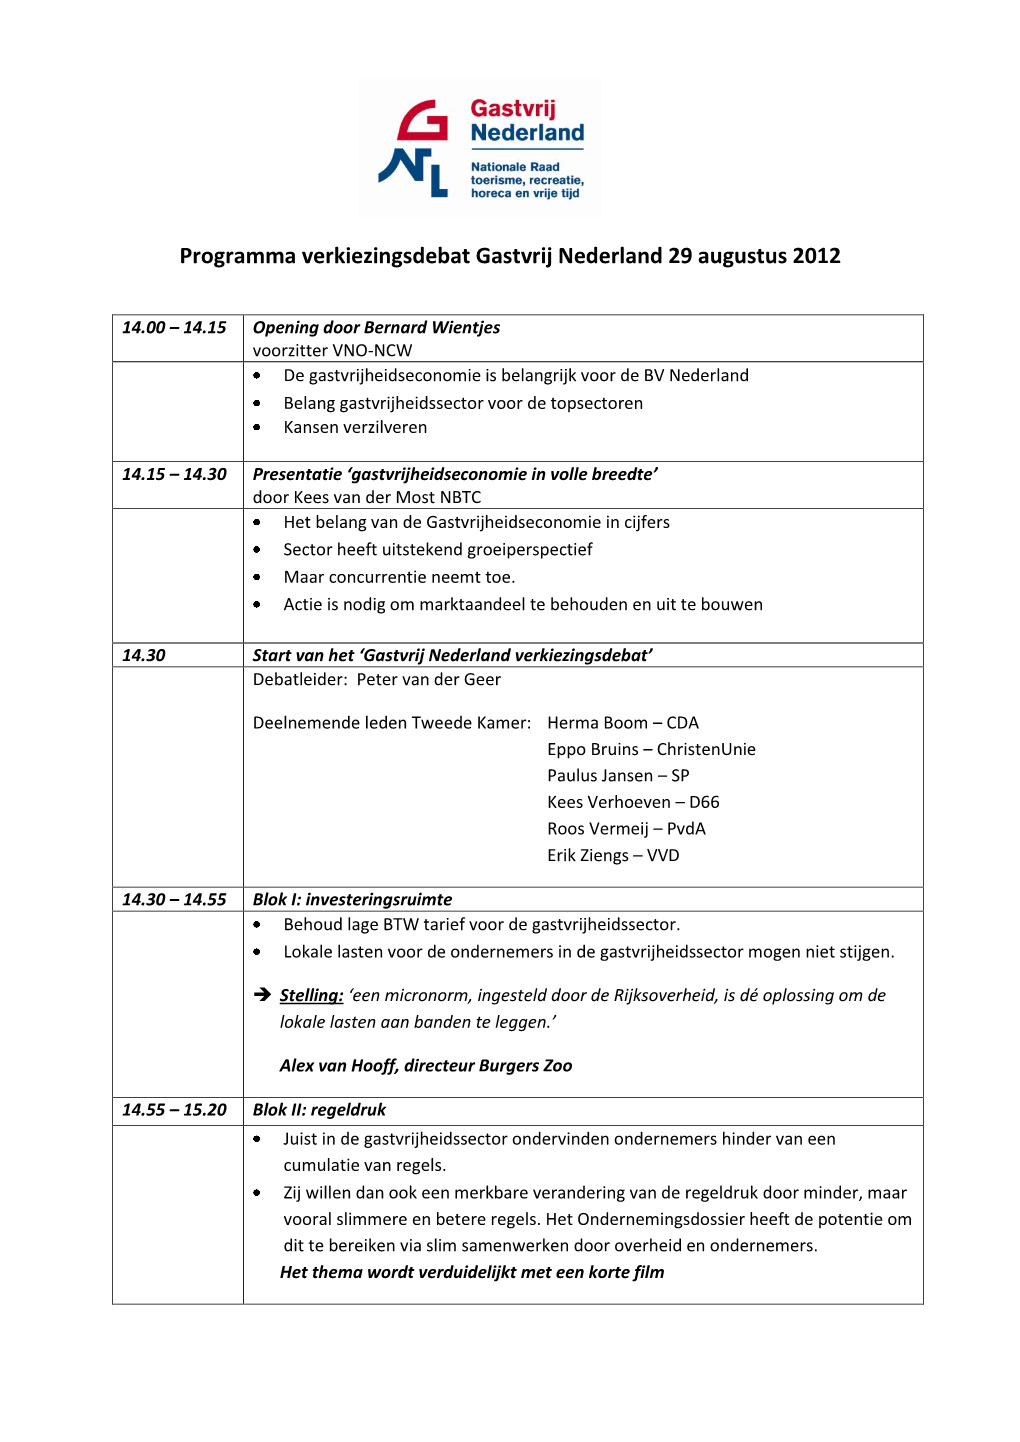 Programma Verkiezingsdebat Gastvrij Nederland 29 Augustus 2012